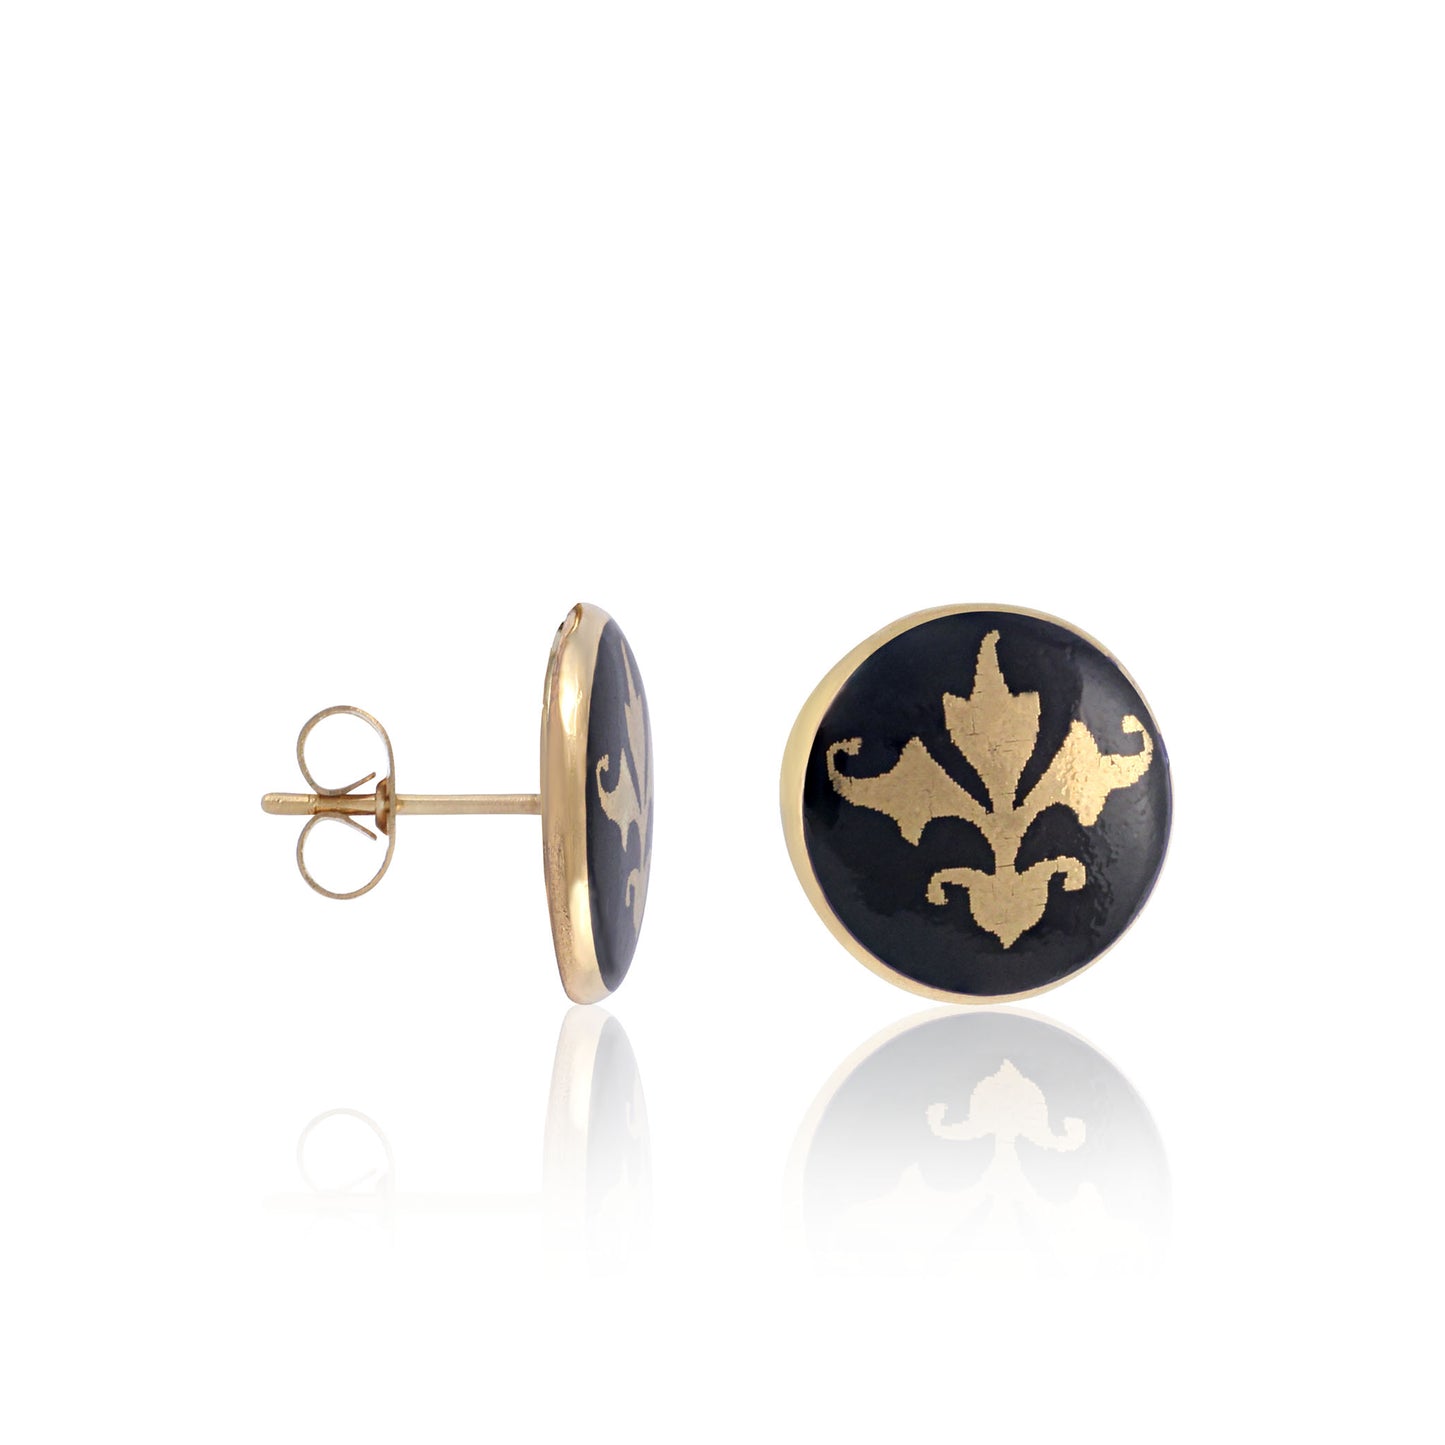 BAROQUE black gold plated fine porcelain earring set